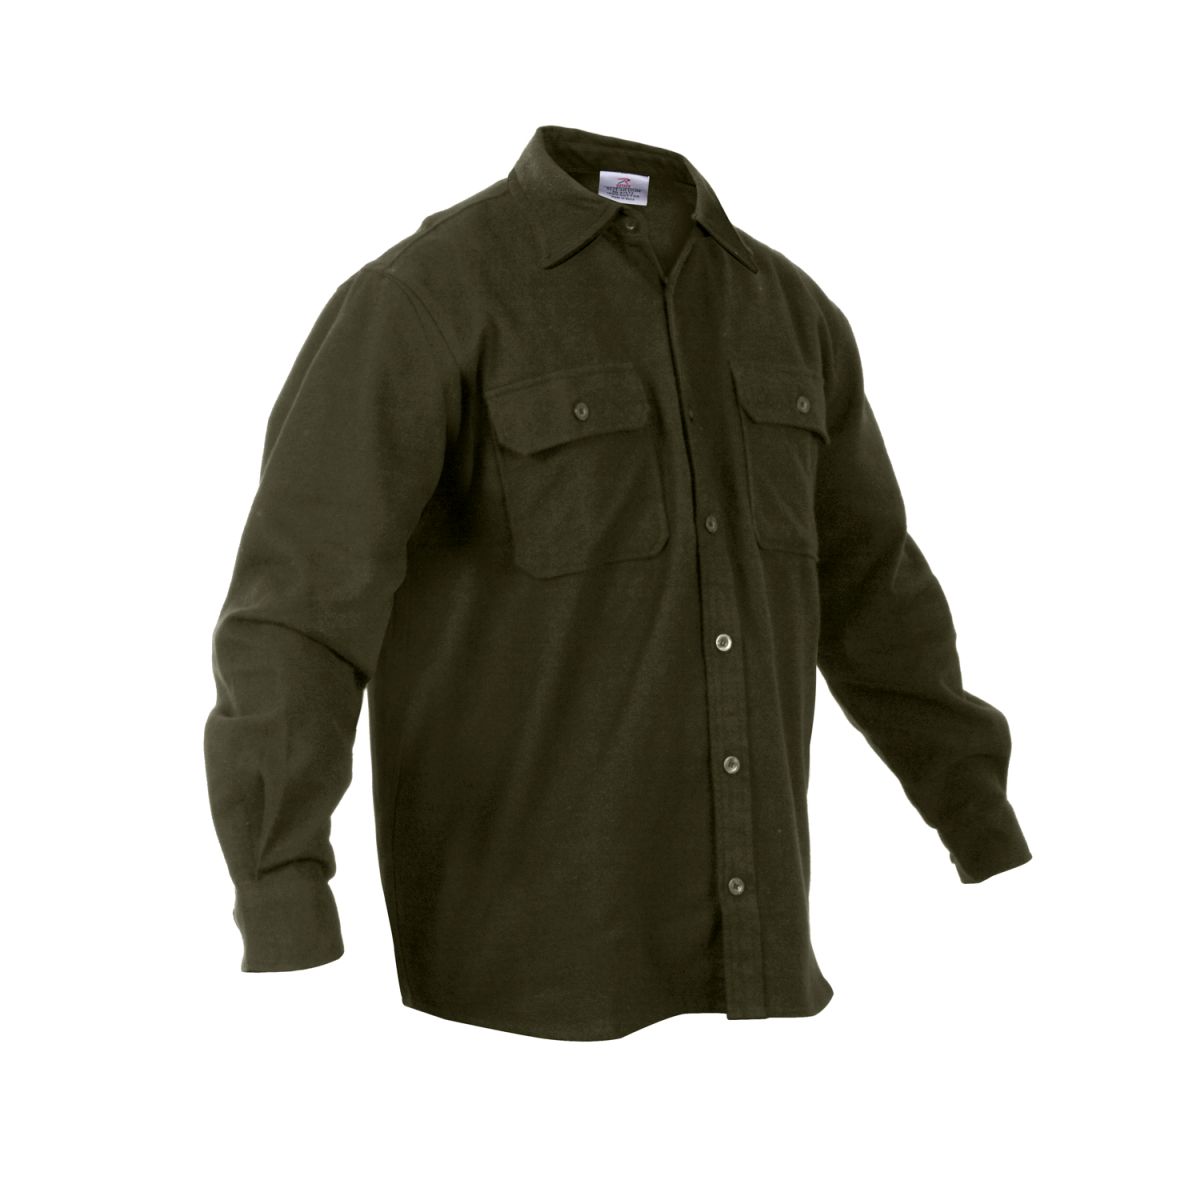 Lumberjack plaid shirt FLANNEL OLIVE ROTHCO 4669 L-11